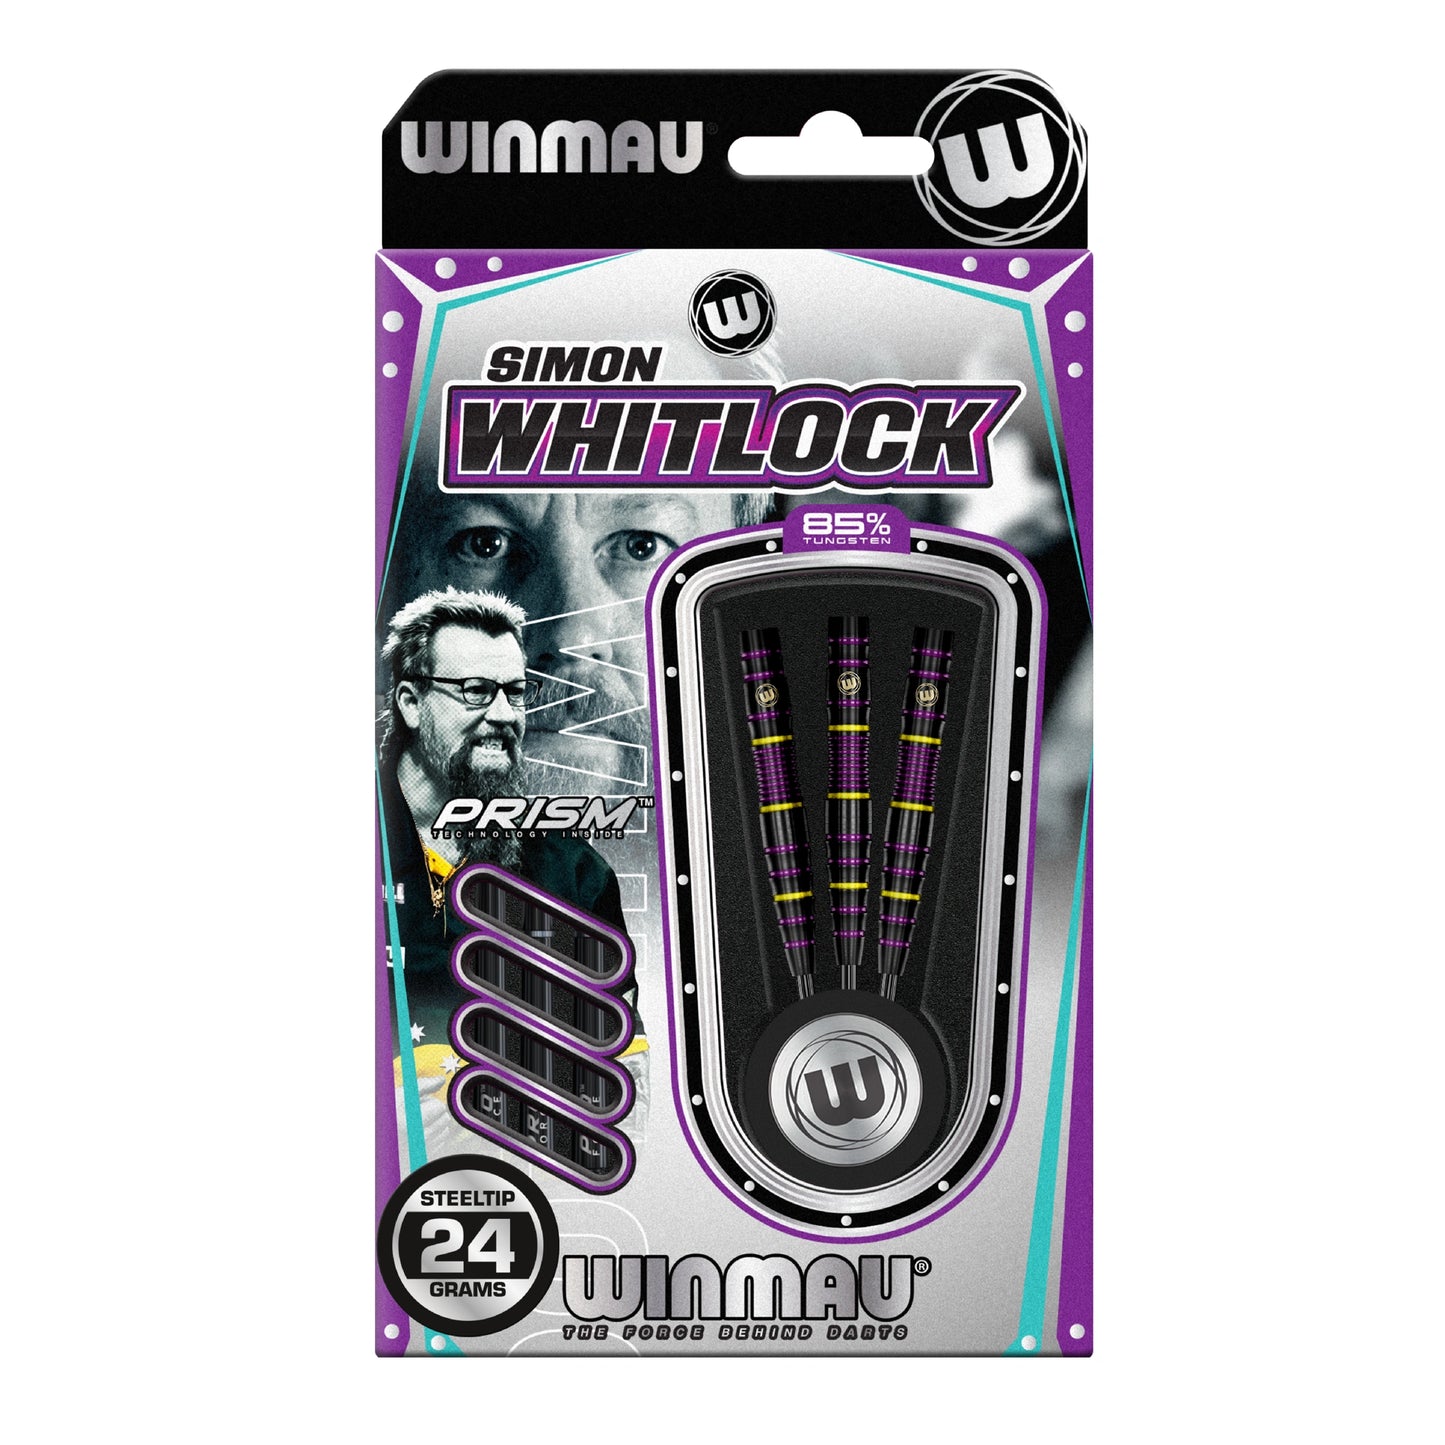 Winmau Simon Whitlock 85% Tungsten Darts 24G